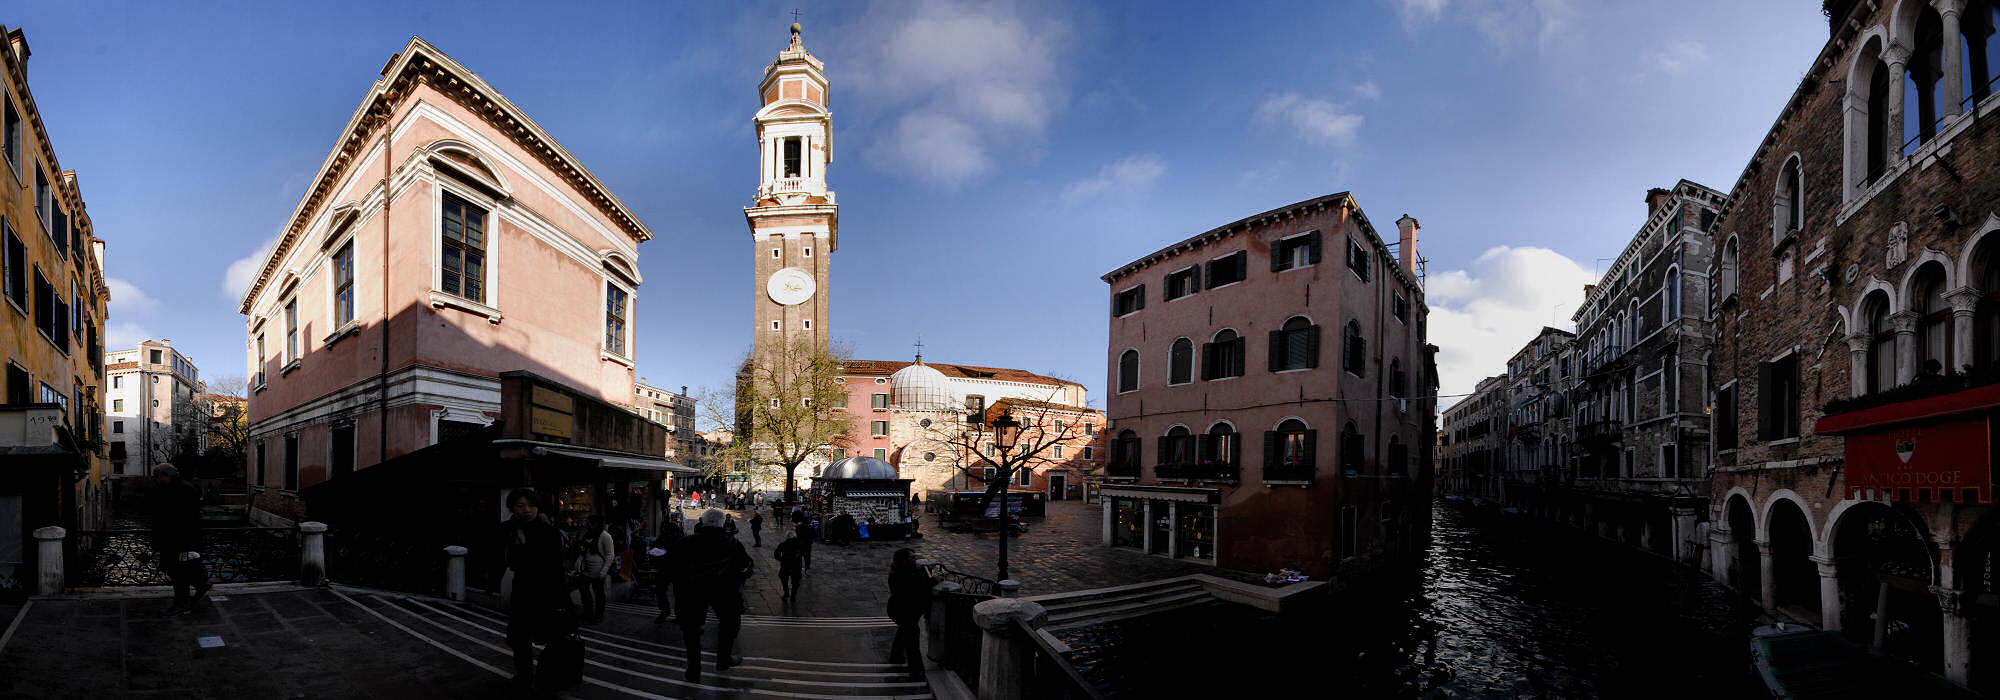 chiesa Santi Apostoli a Venezia